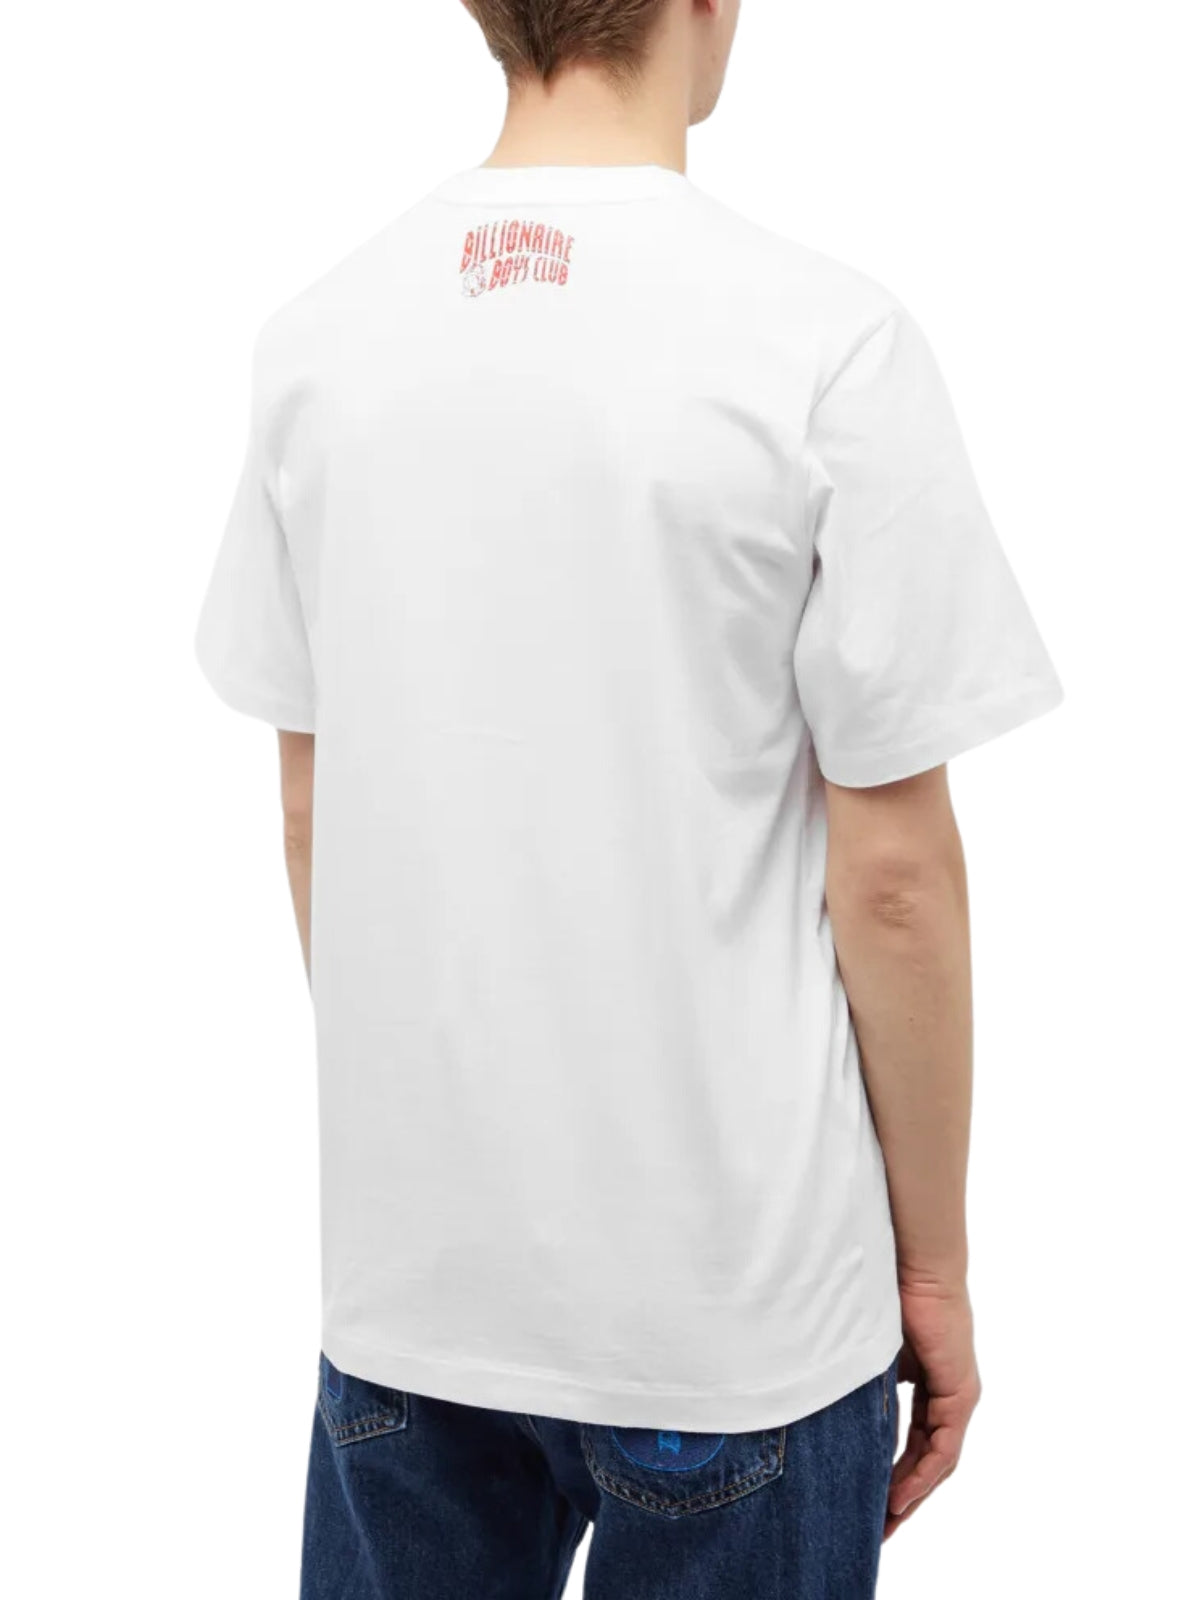 Billionaire Boys Club  T-Shirt Heat White